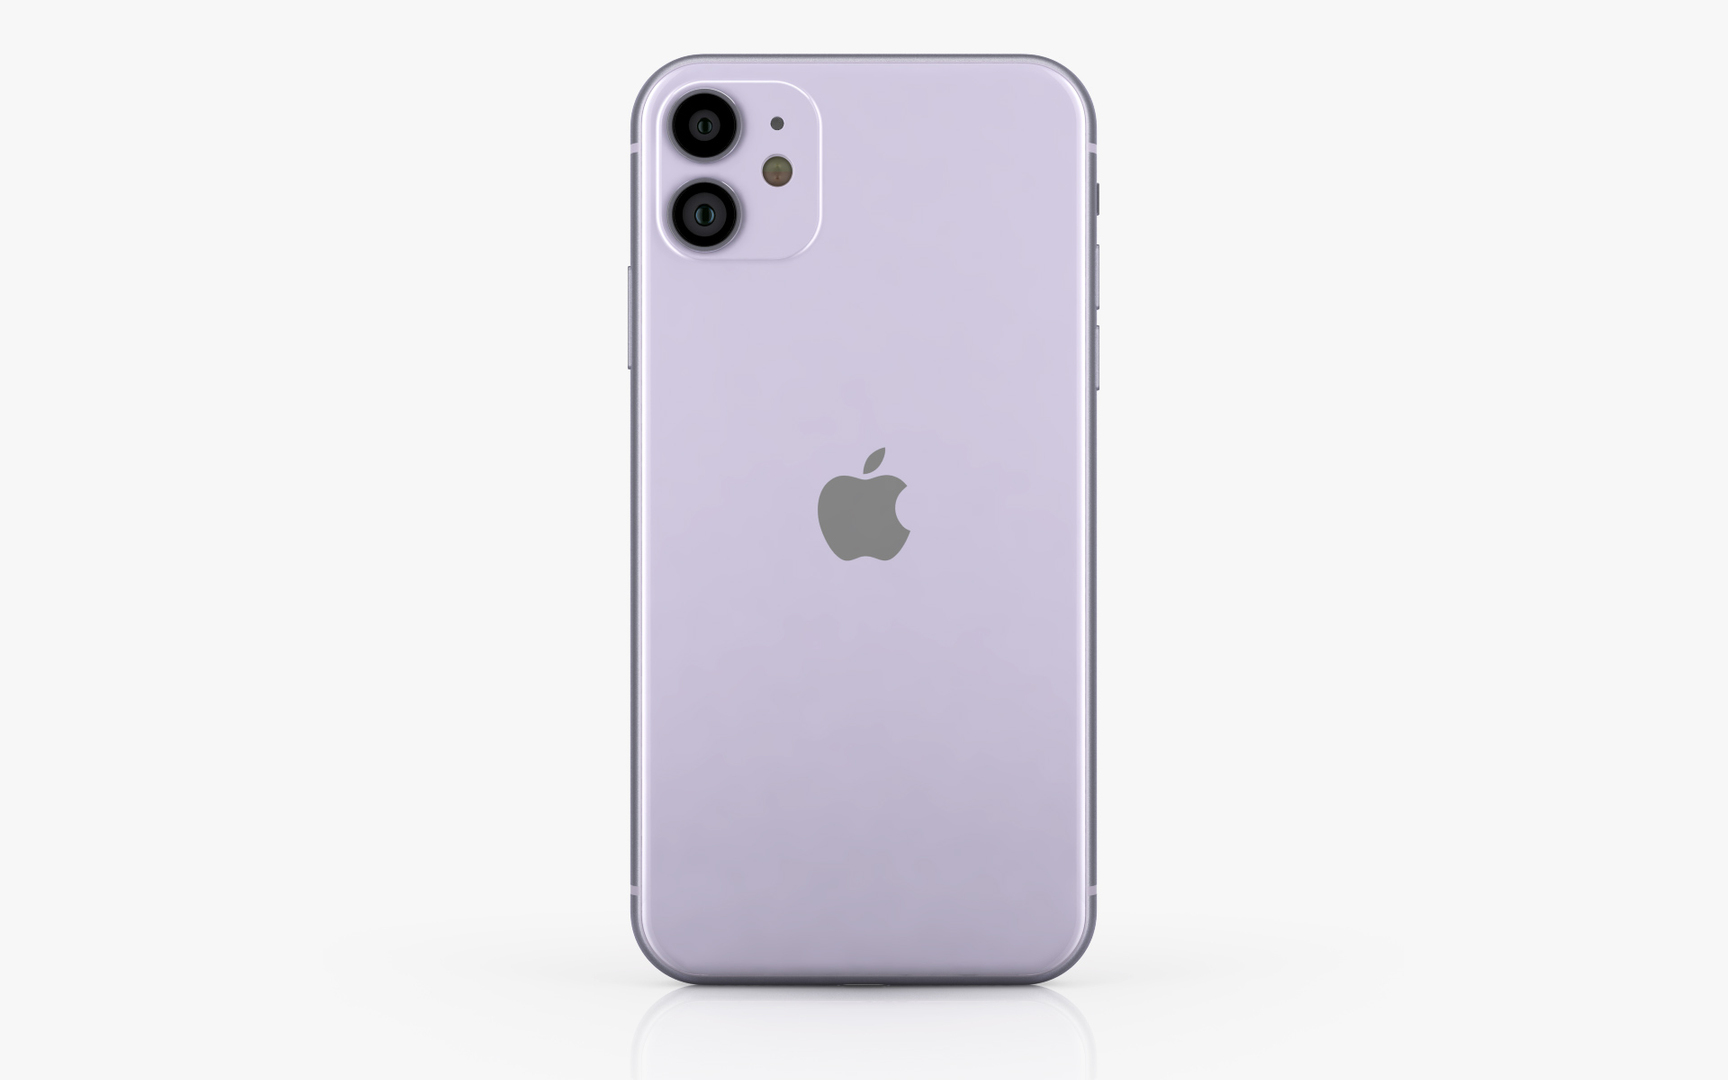 apple iphone 11 color model https://p.turbosquid.com/ts-thumb/7g/G5nufe/nEiSdN2p/iphone11_purple/jpg/1568923016/1920x1080/turn_fit_q99/2e1d680b9131d33ae68d0495323162e59c8dfdc9/iphone11_purple-1.jpg